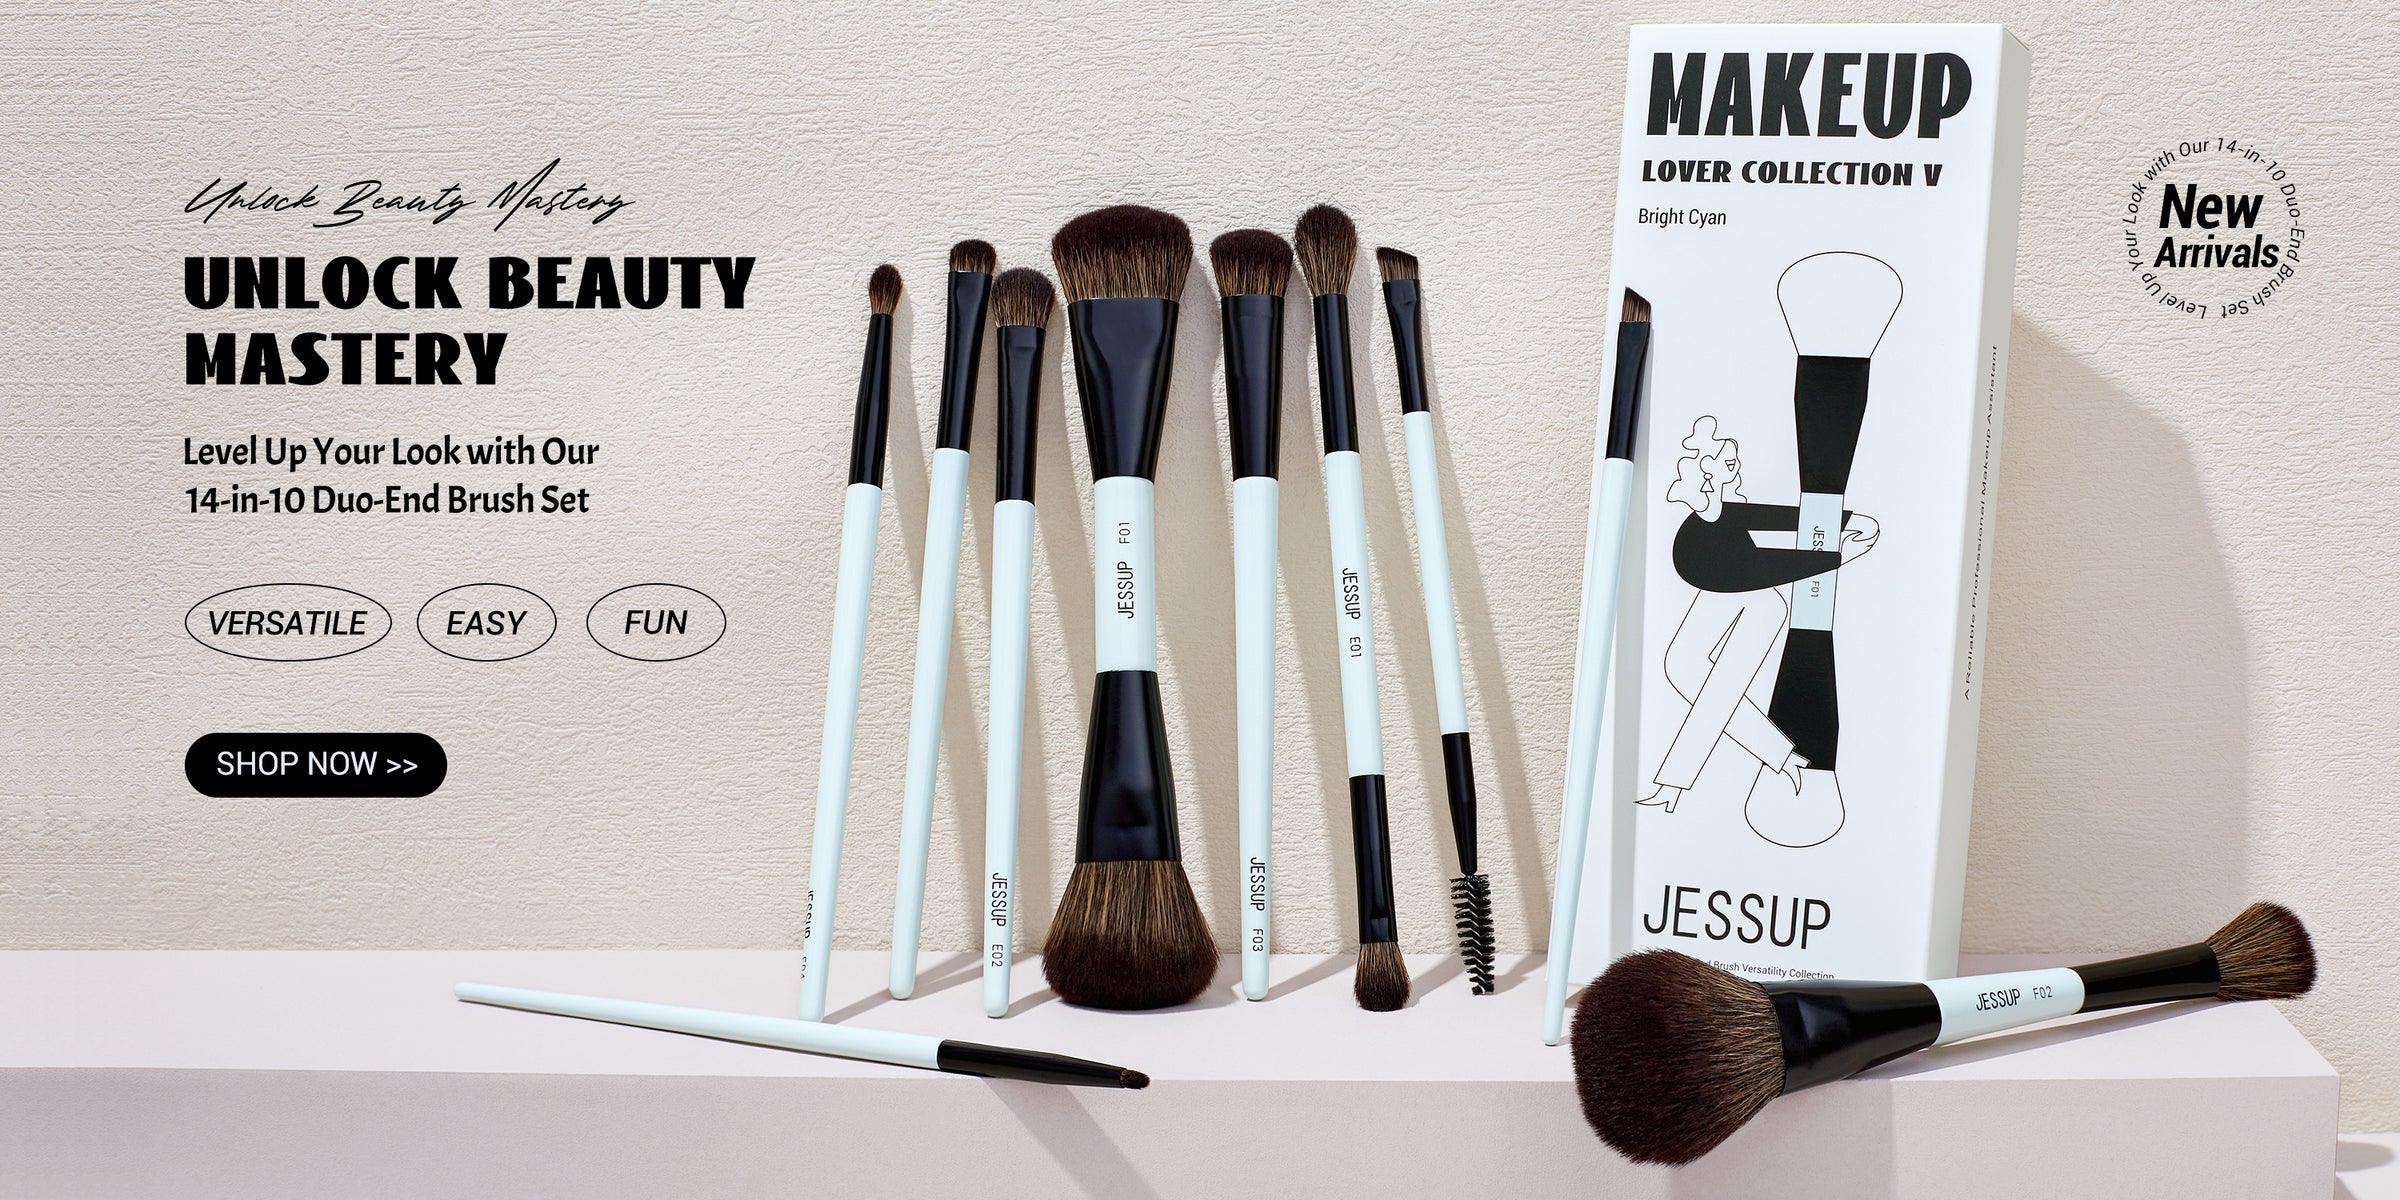 Jessup duo-end makeup brush set